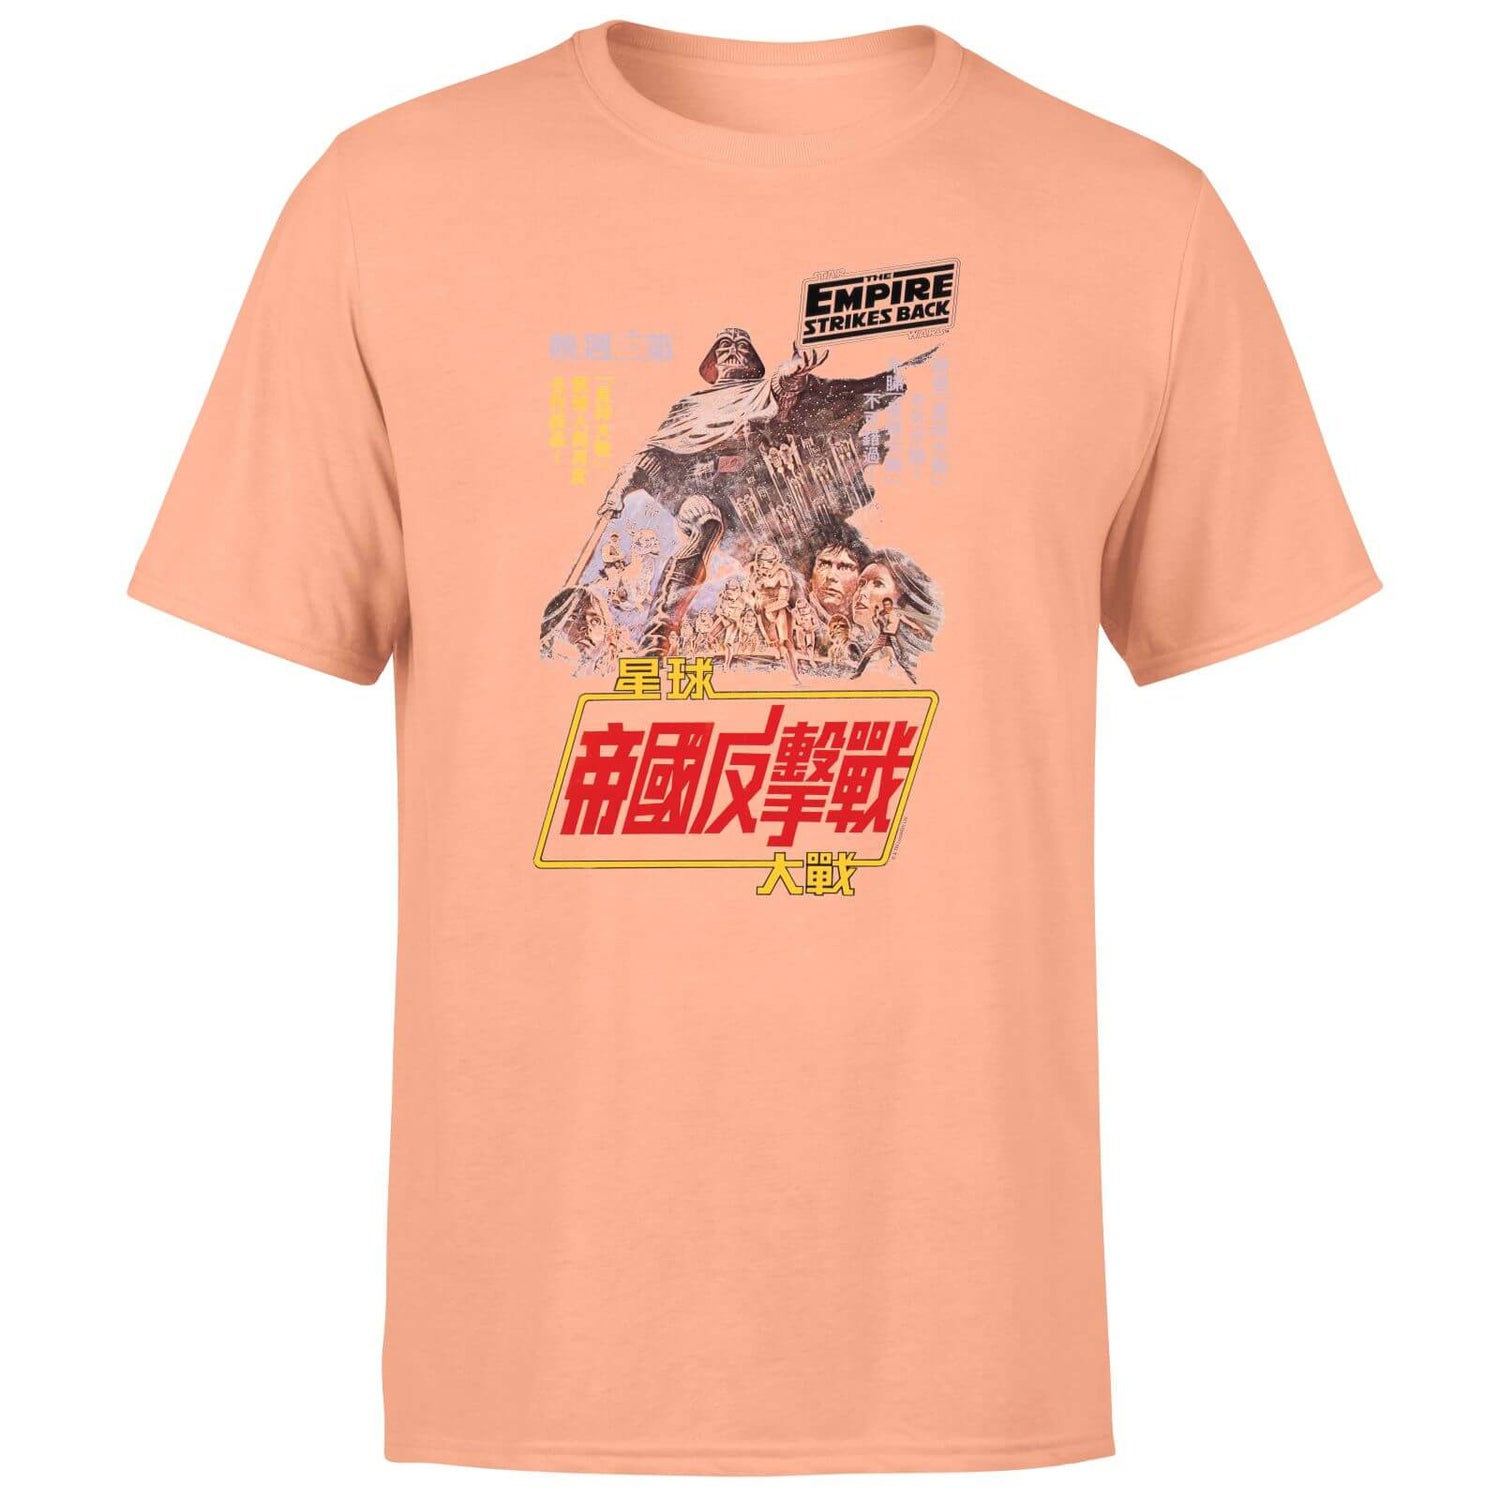 Star Wars Empire Strikes Back Kanji Poster Men's T-Shirt - Coral